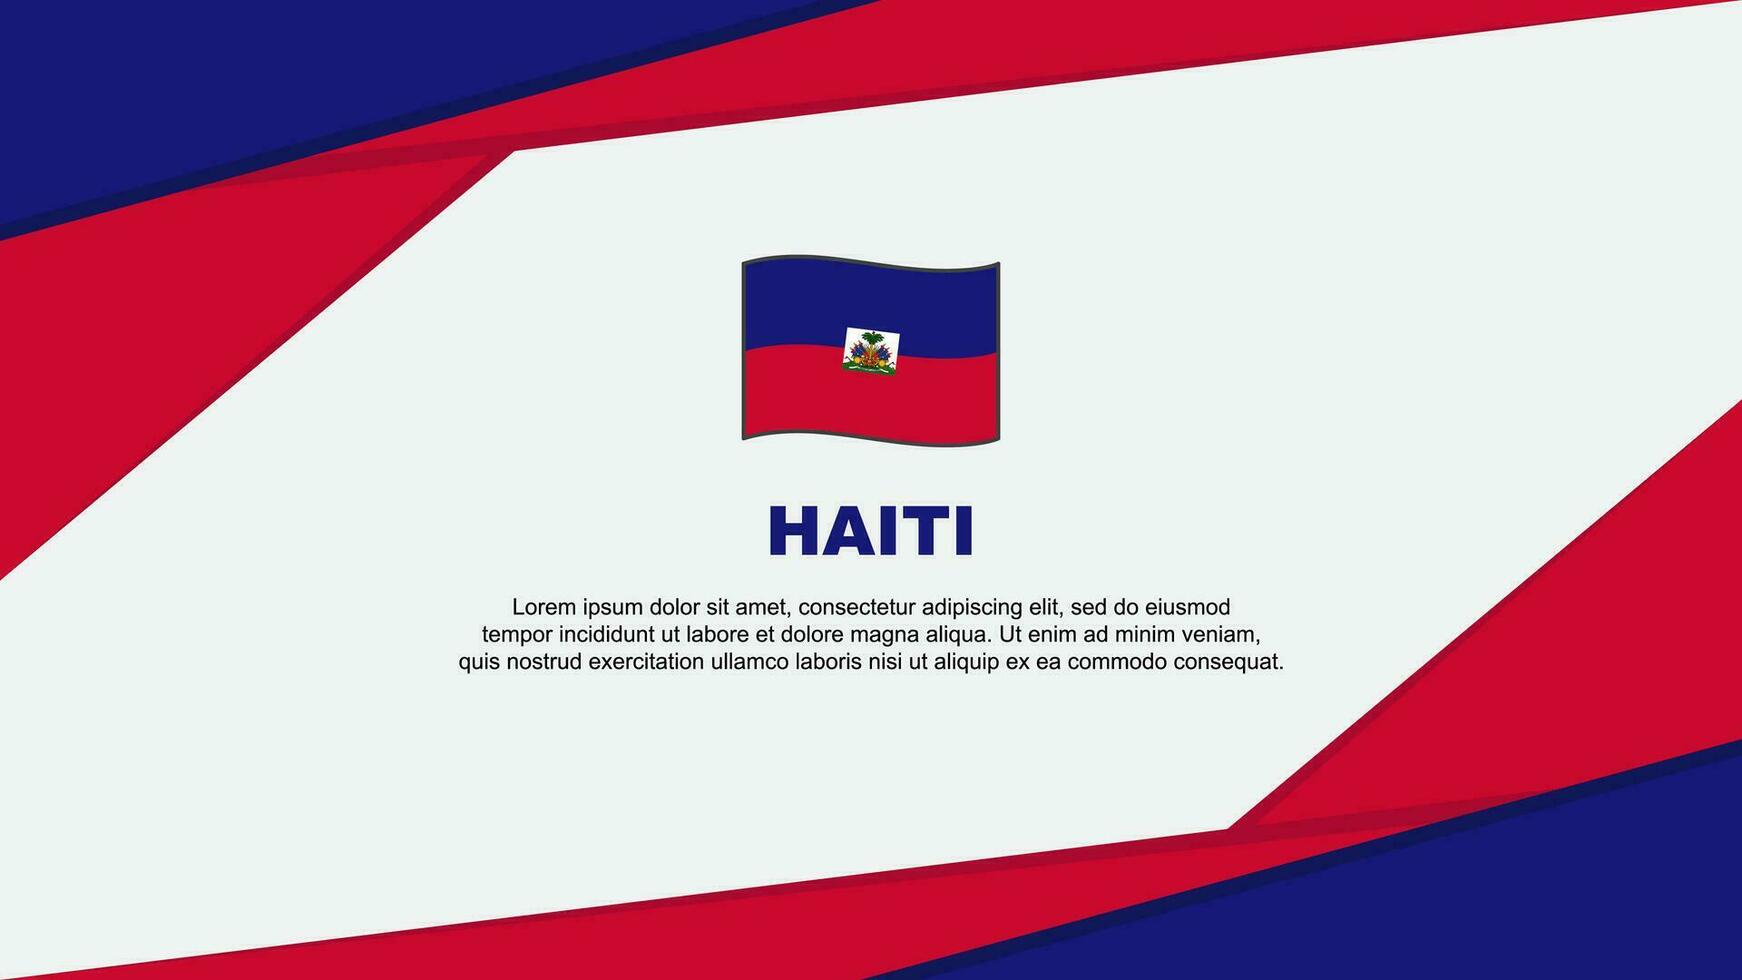 Haiti Flag Abstract Background Design Template. Haiti Independence Day Banner Cartoon Vector Illustration. Haiti Background